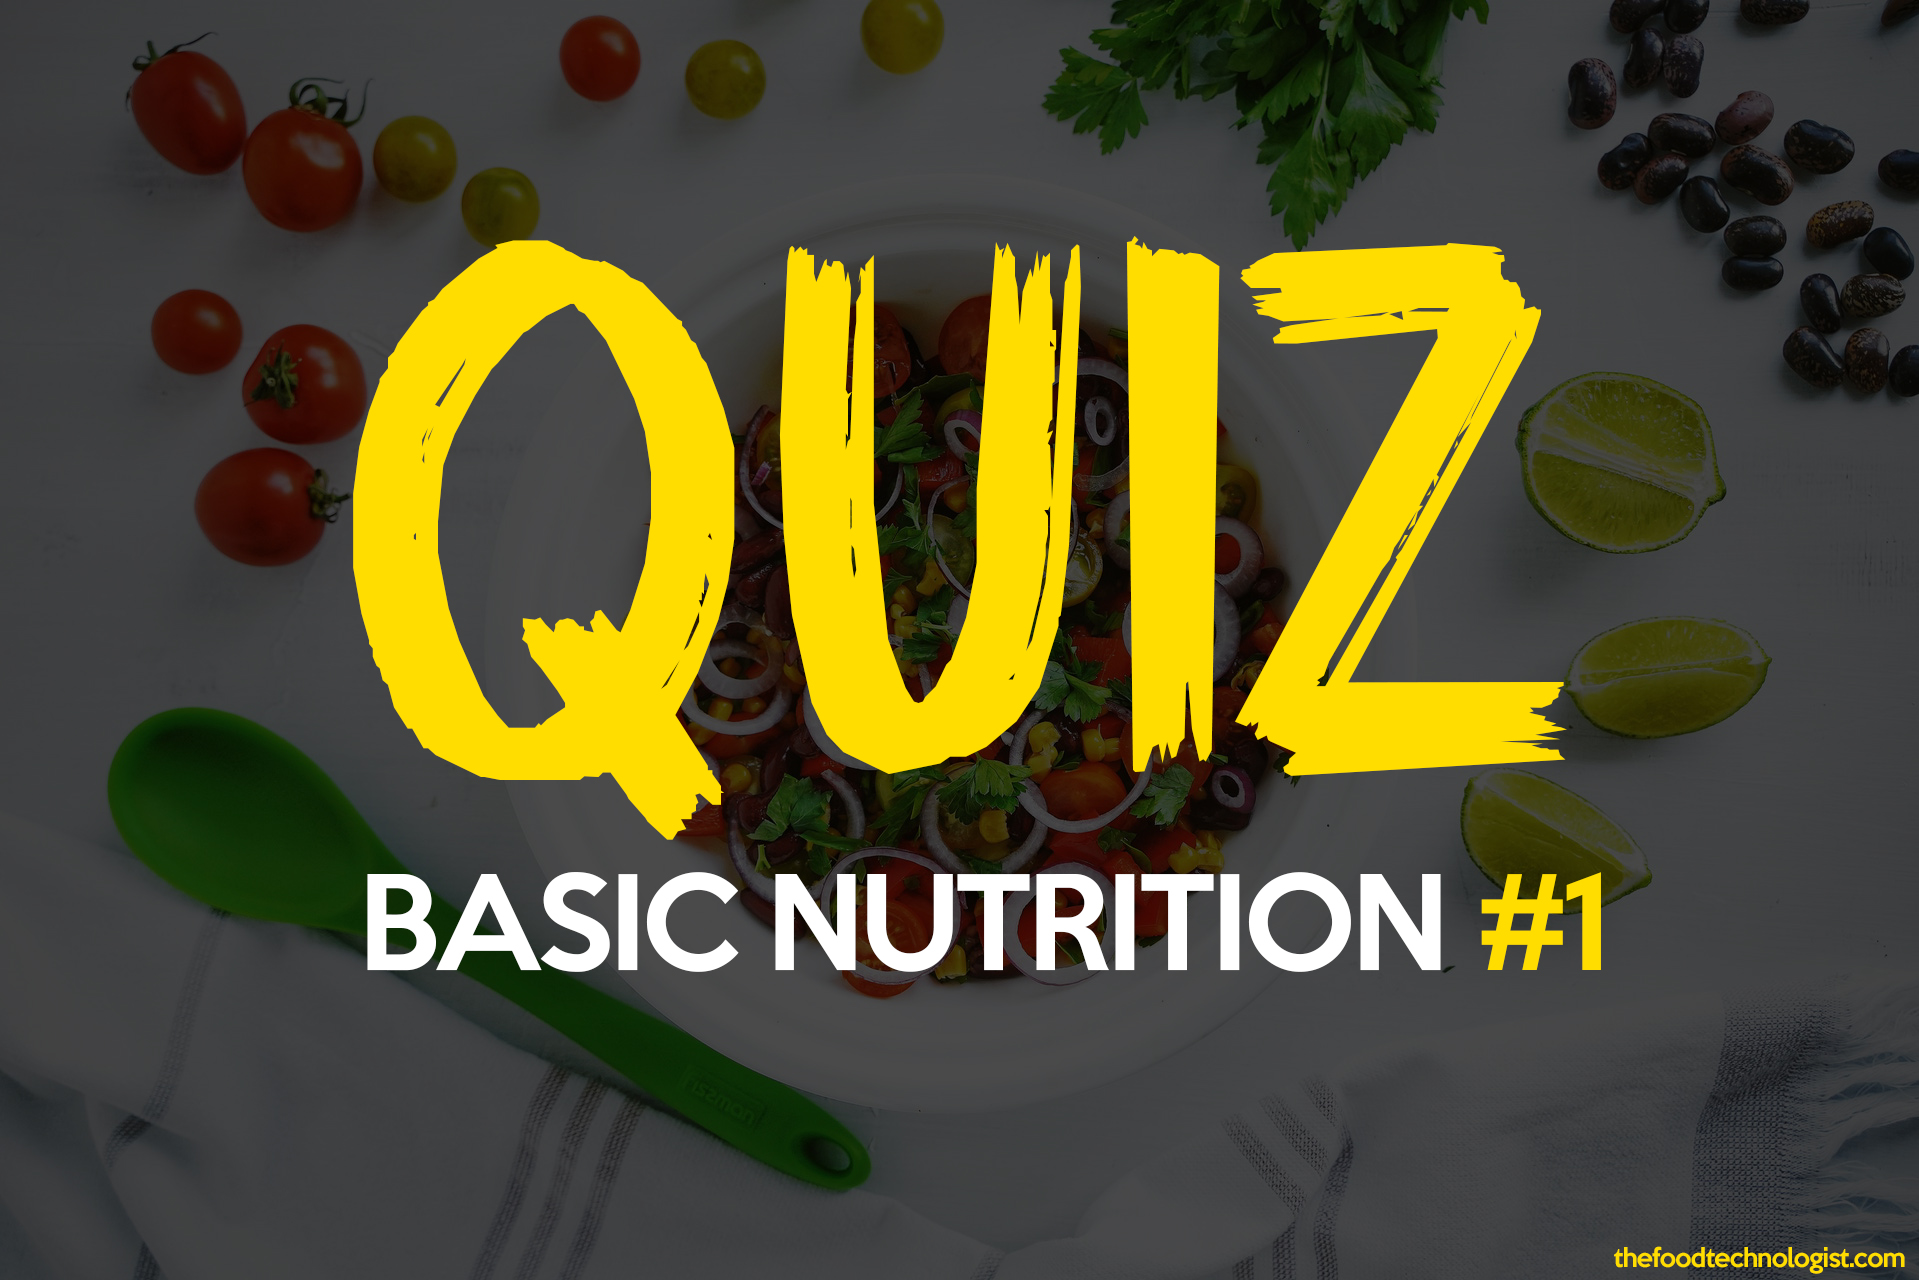 Quiz on Basic Nutrition text